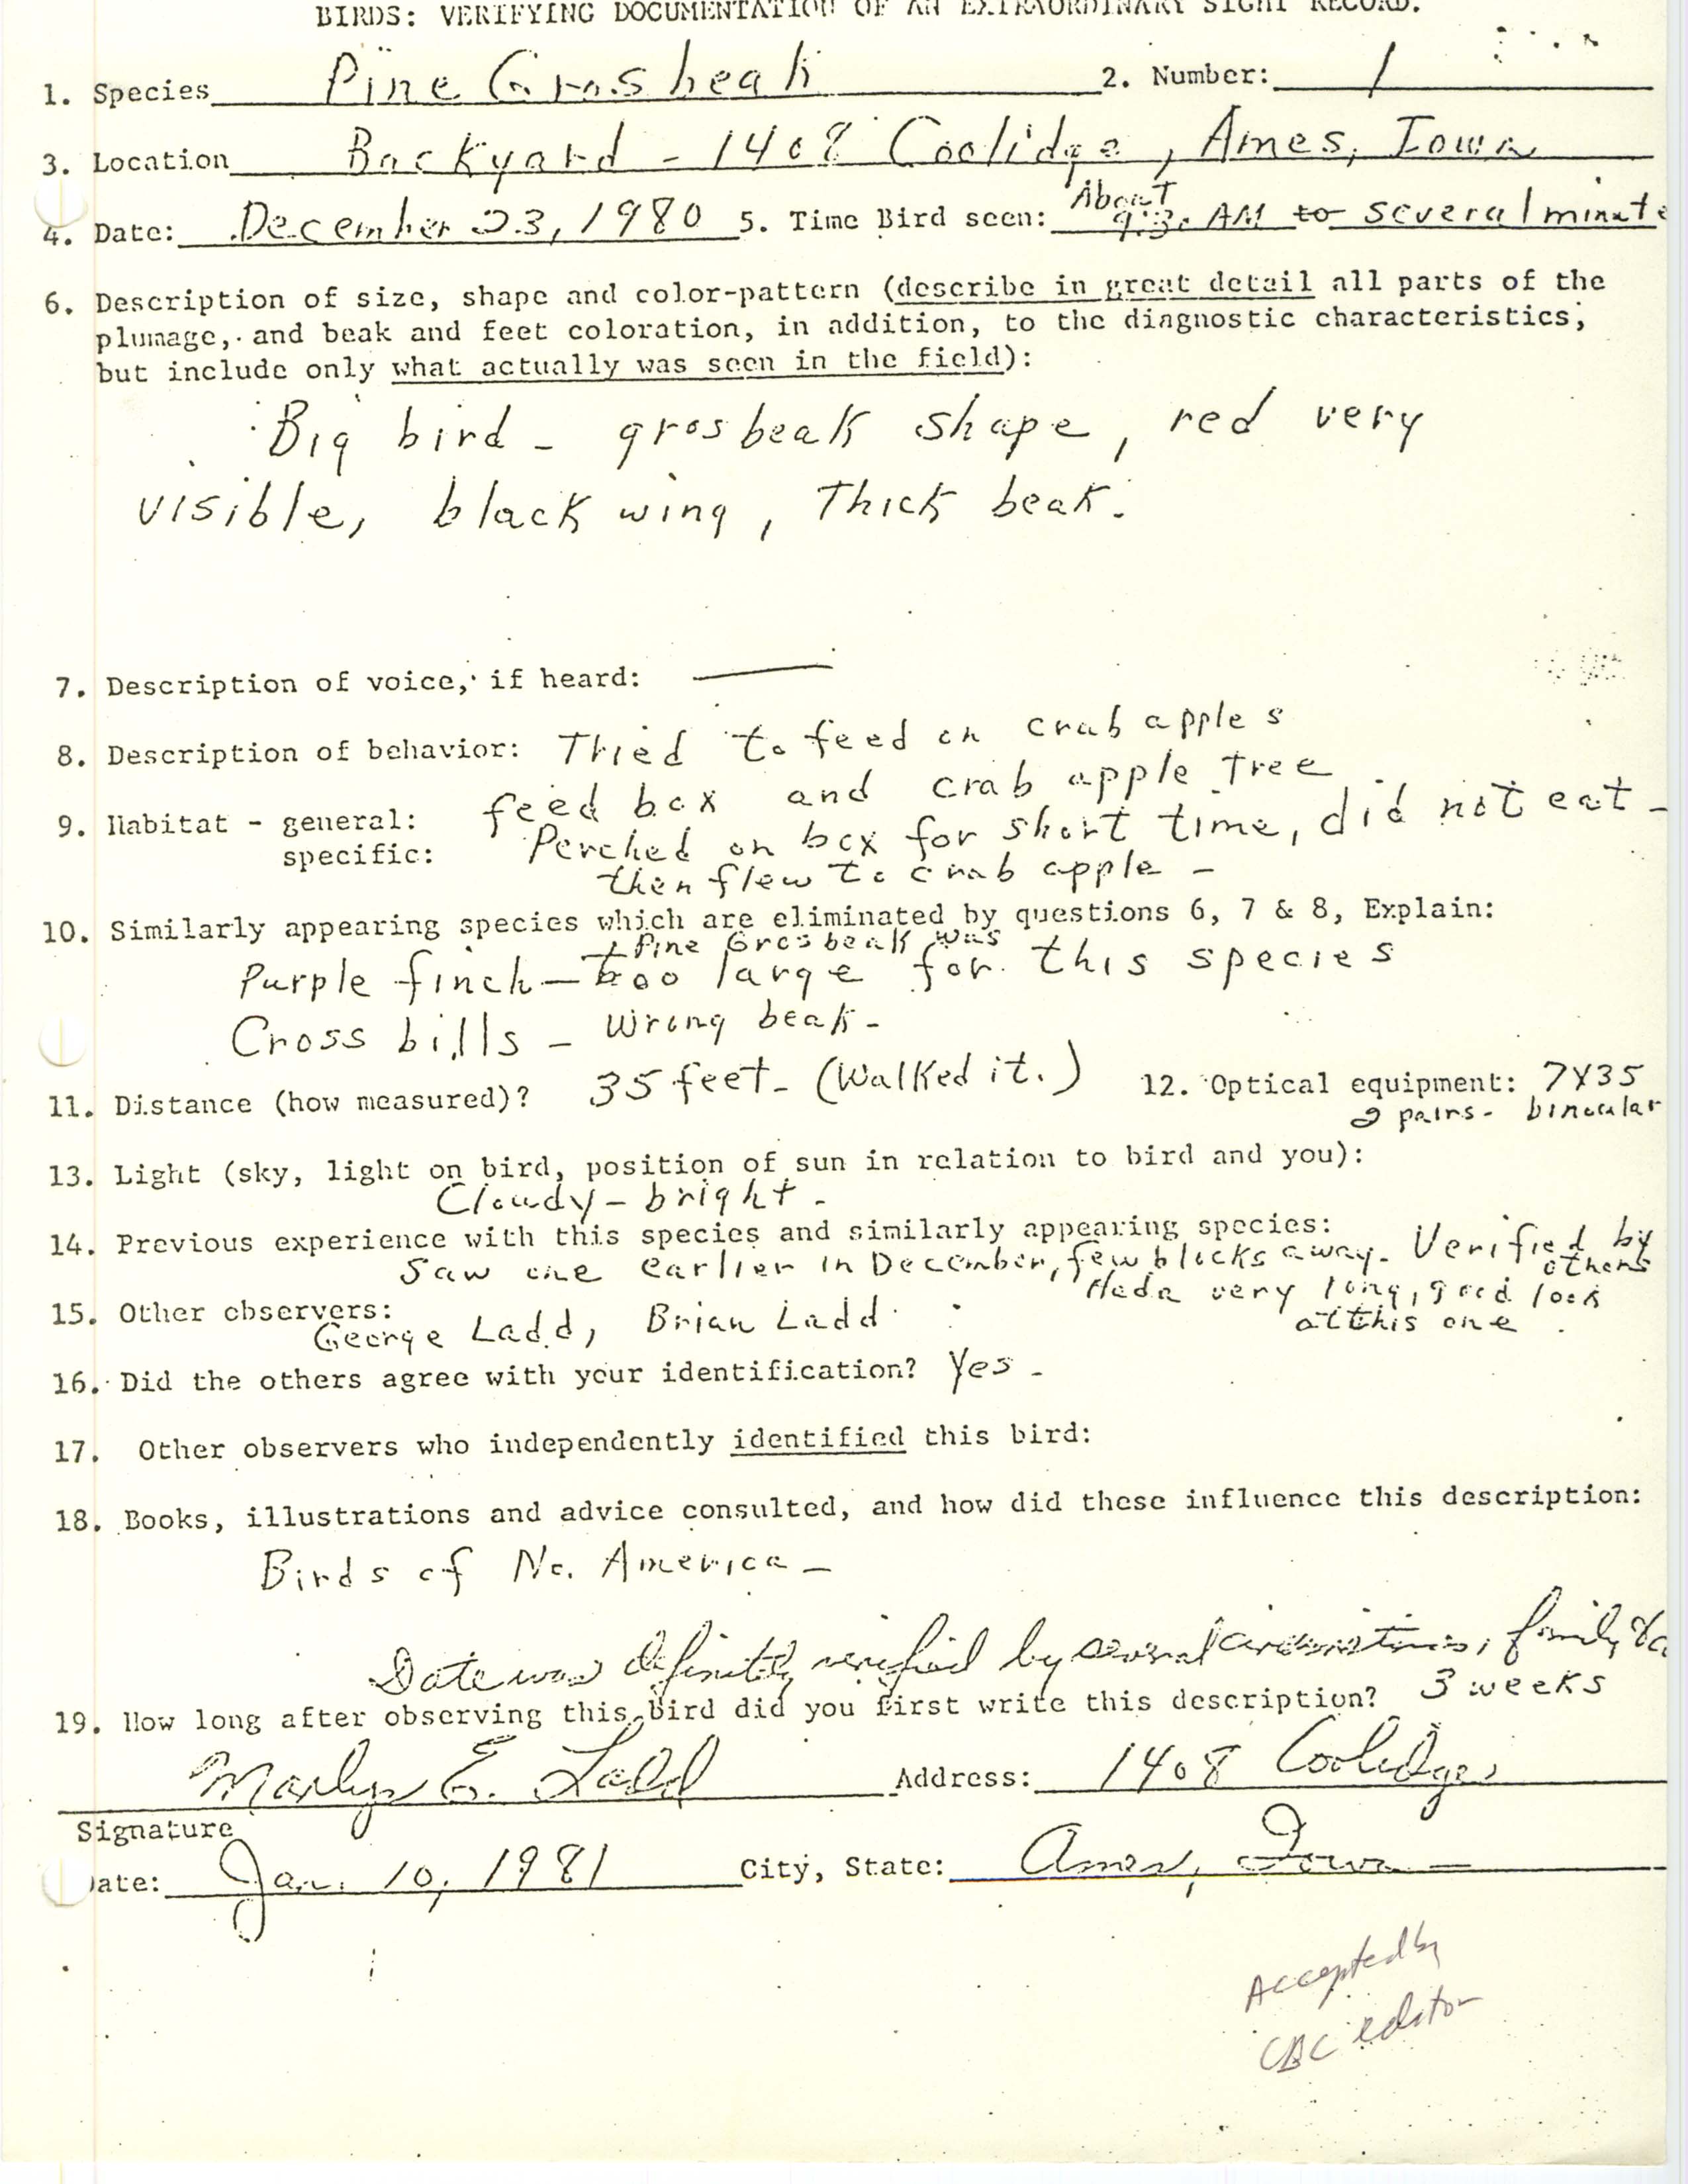 Rare bird documentation form for Pine Grosbeak at Ames, 1980